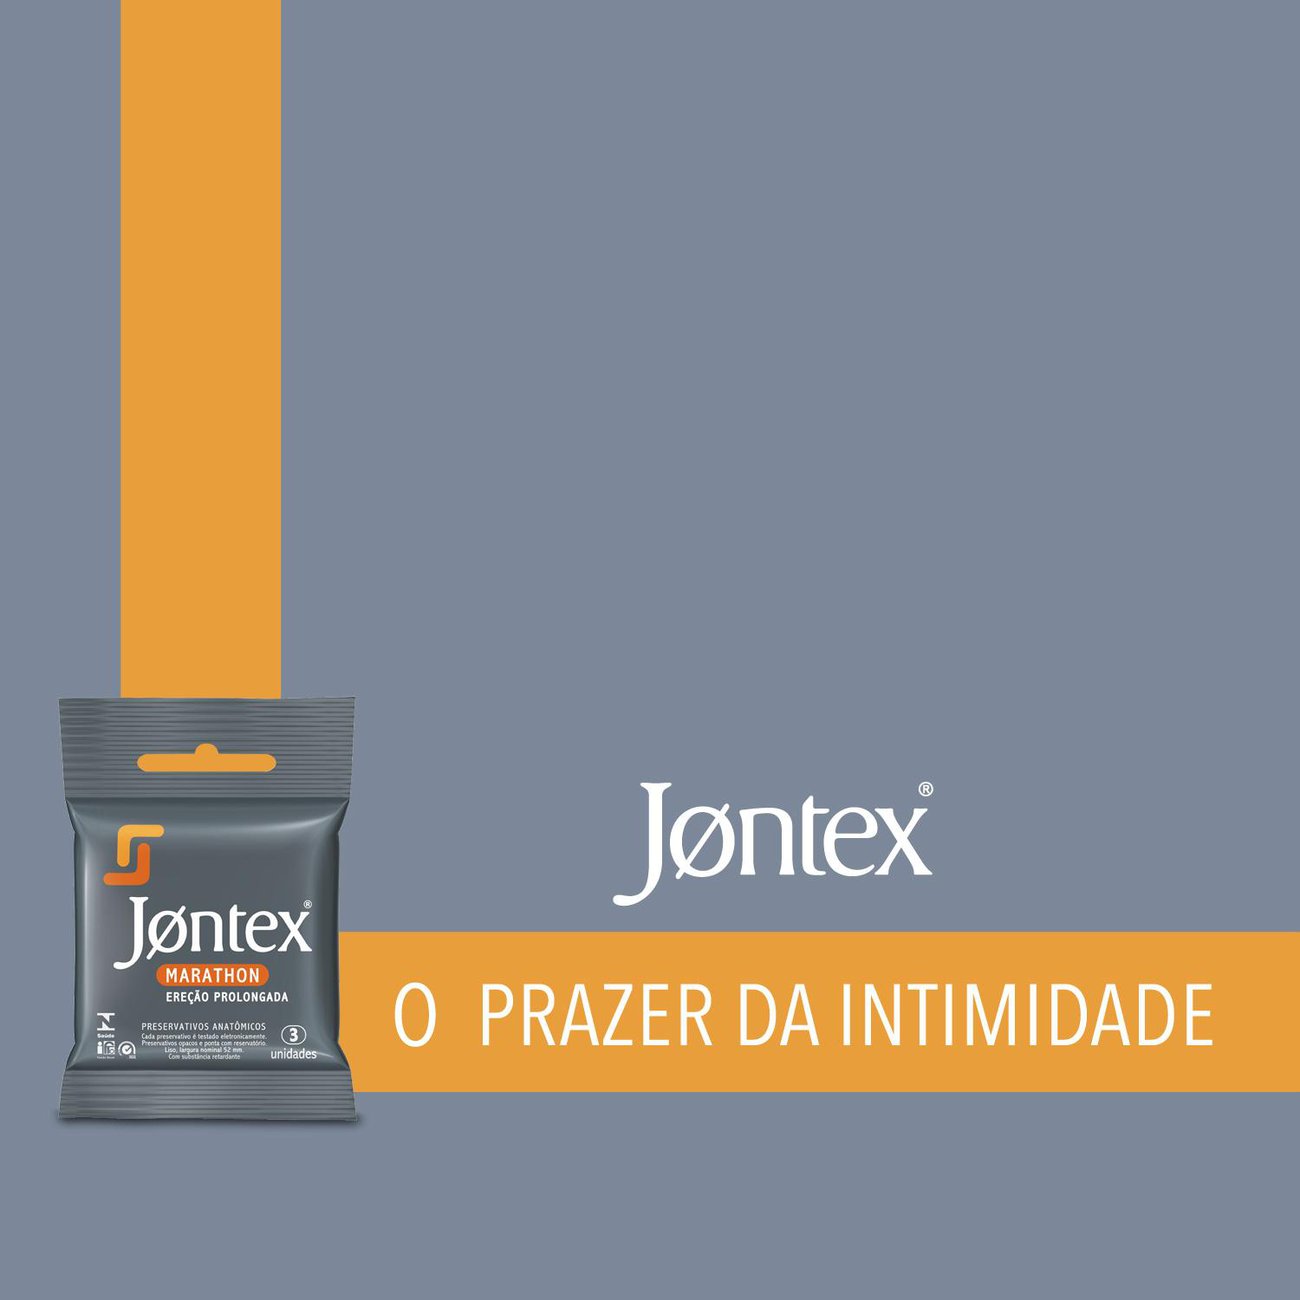 Preservativo Camisinha Jontex Ereo Prolongada - 3 Unidades